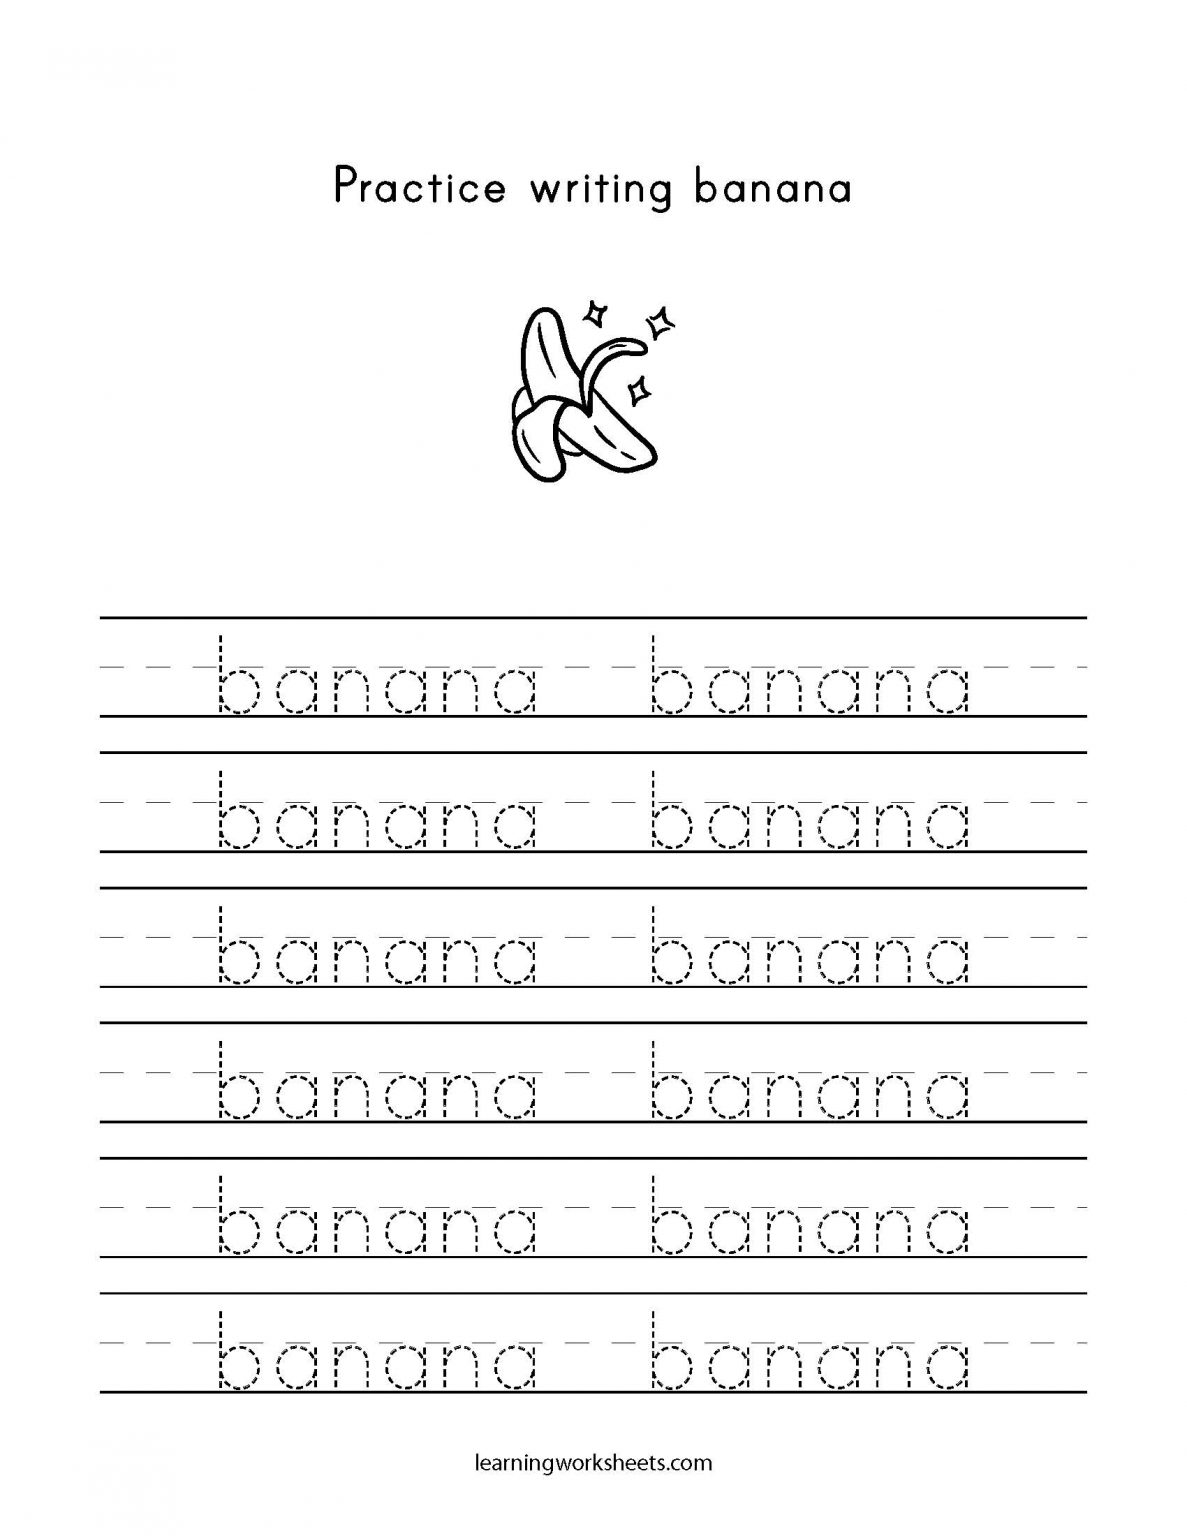 practice-writing-banana-learning-worksheets